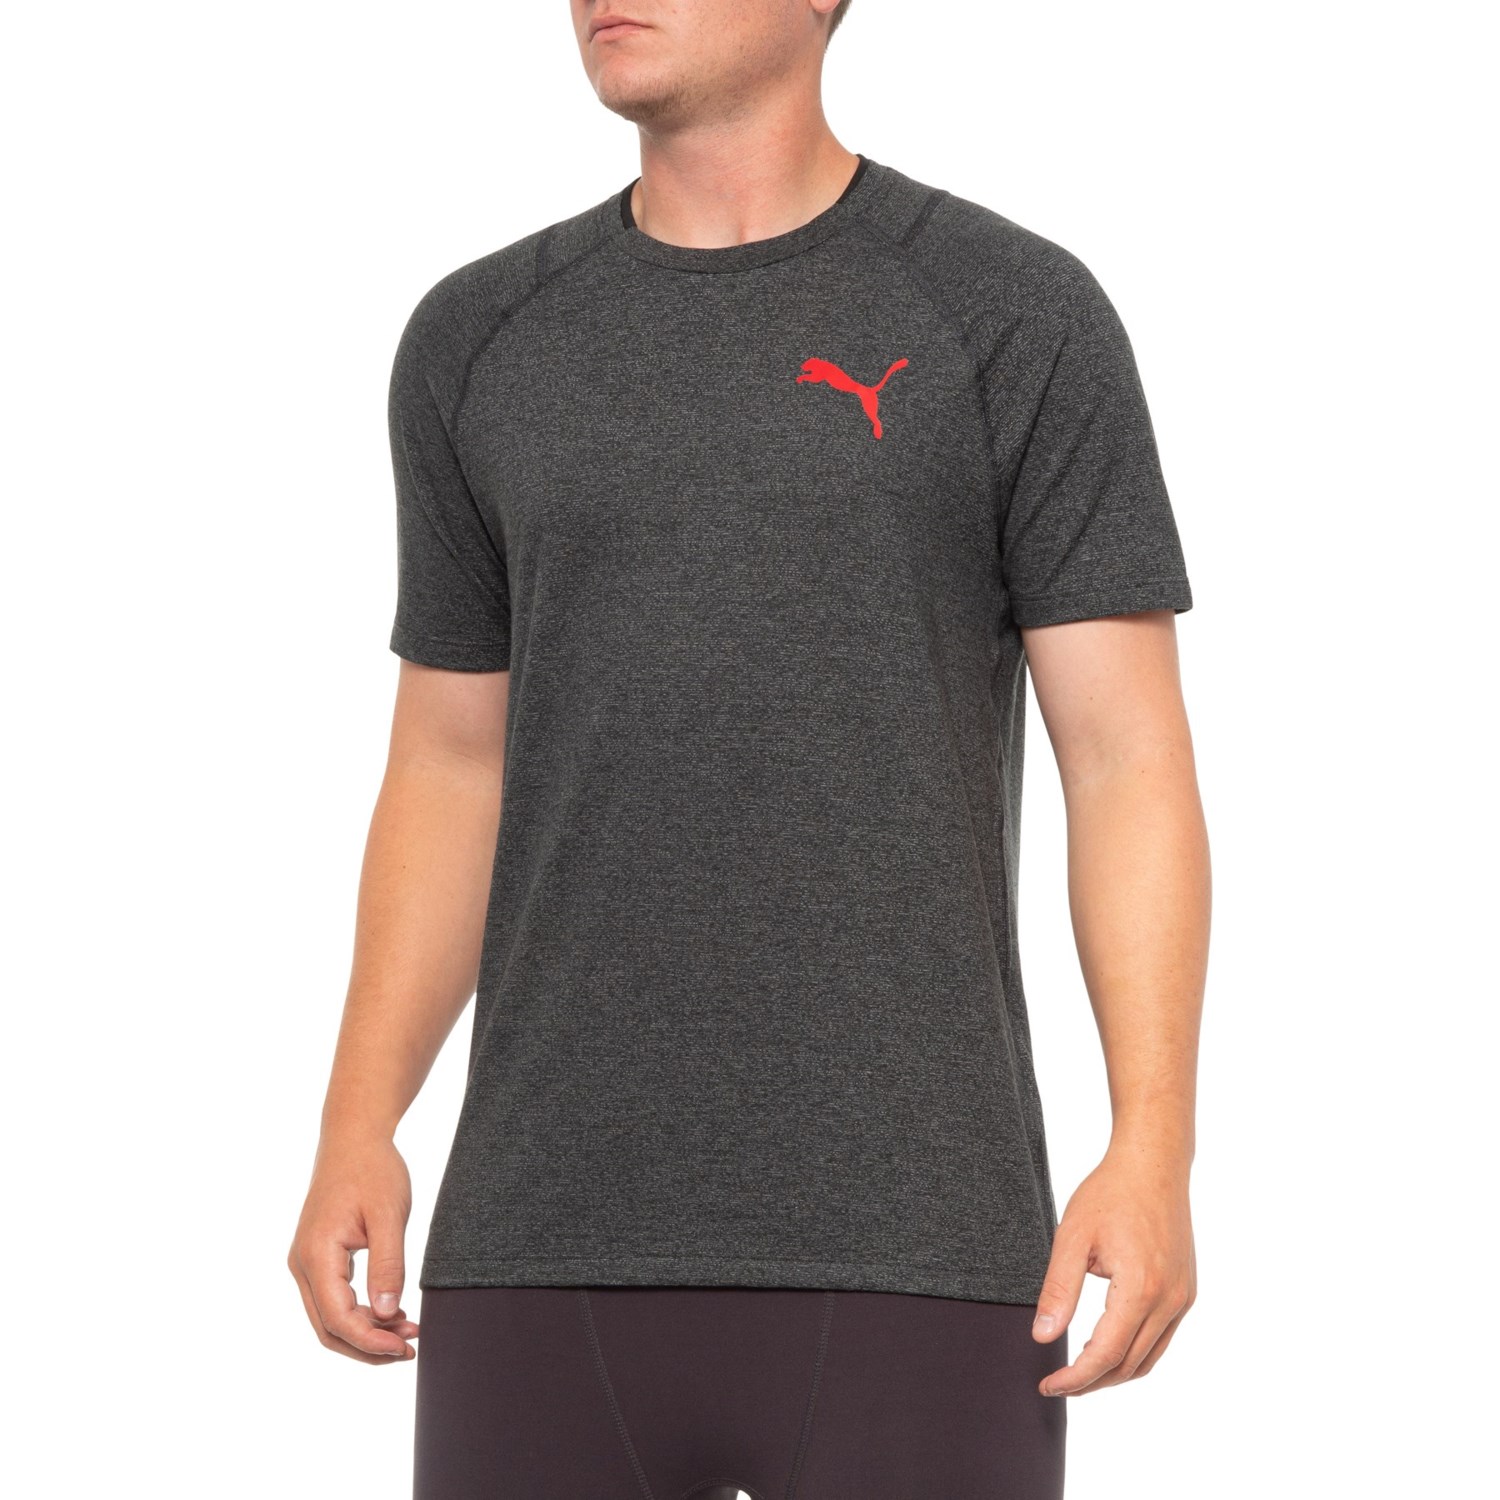 Puma Grey Black Red Finish Line T Shirt For Men Save 76